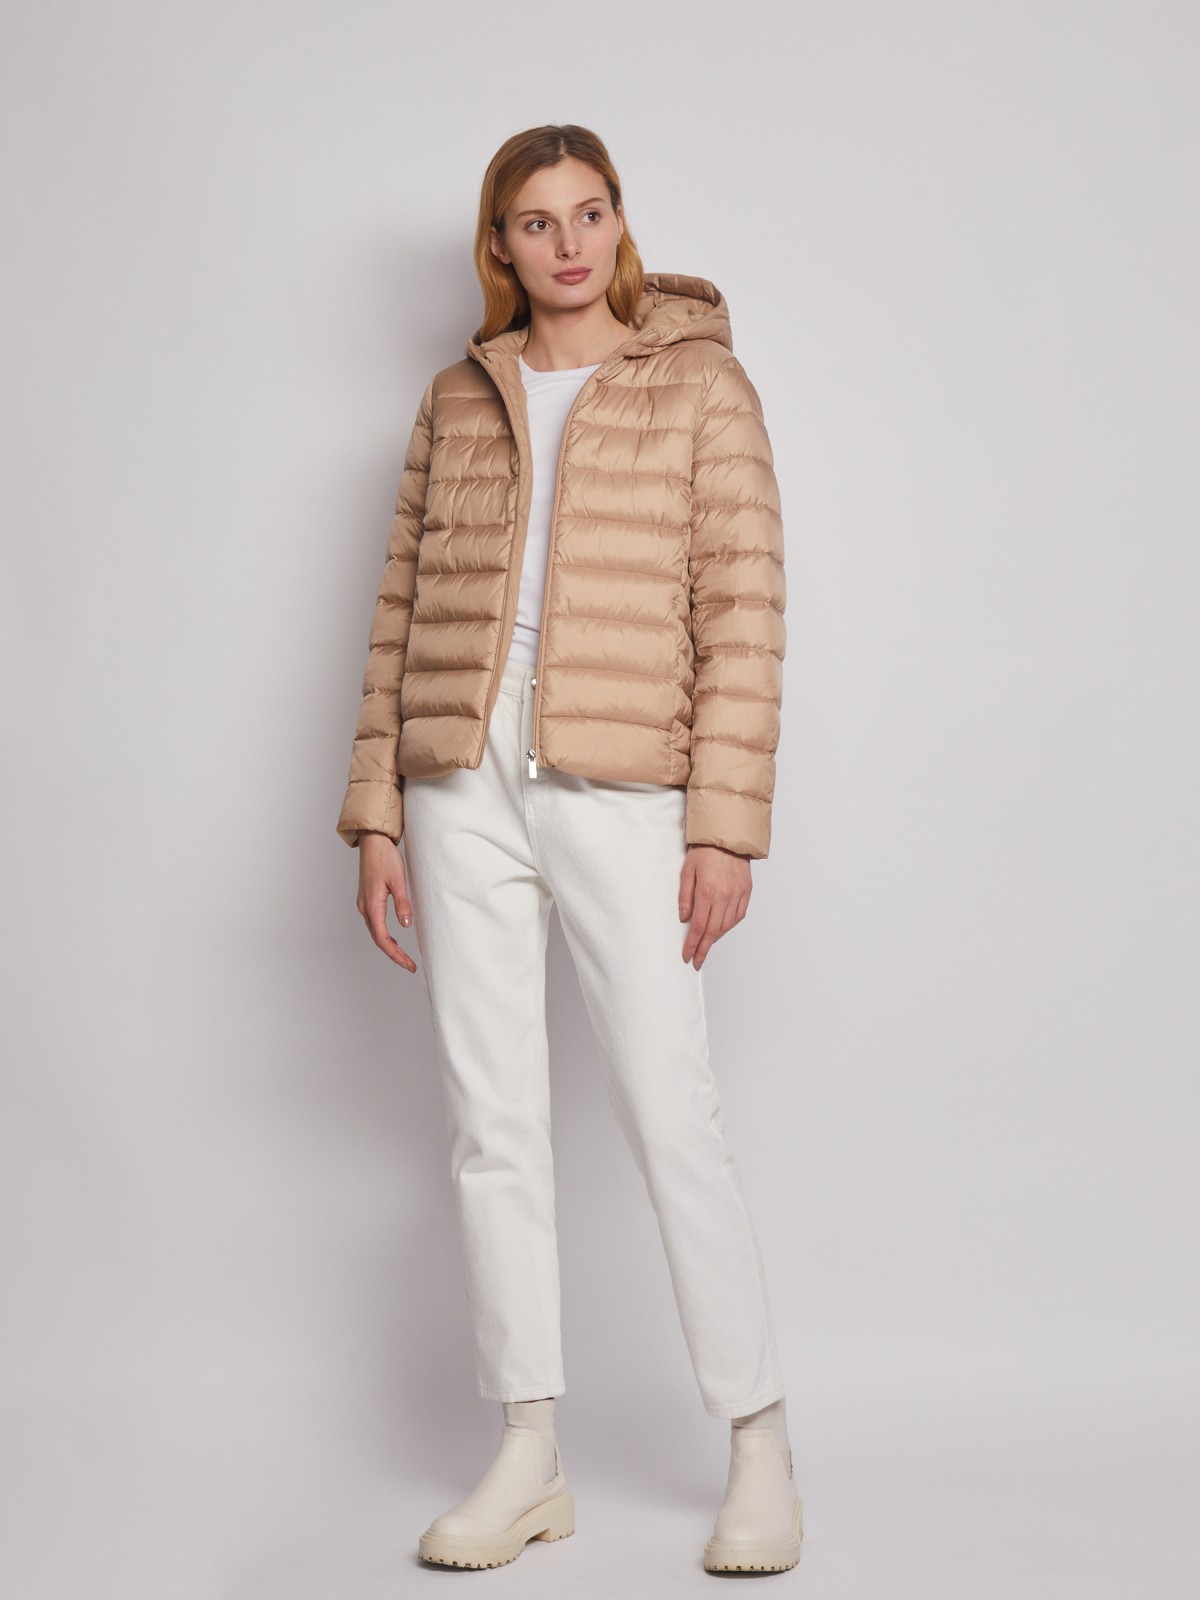 Утеплённая стёганая куртка с капюшоном zolla 023125112274, цвет бежевый, размер S - фото 2